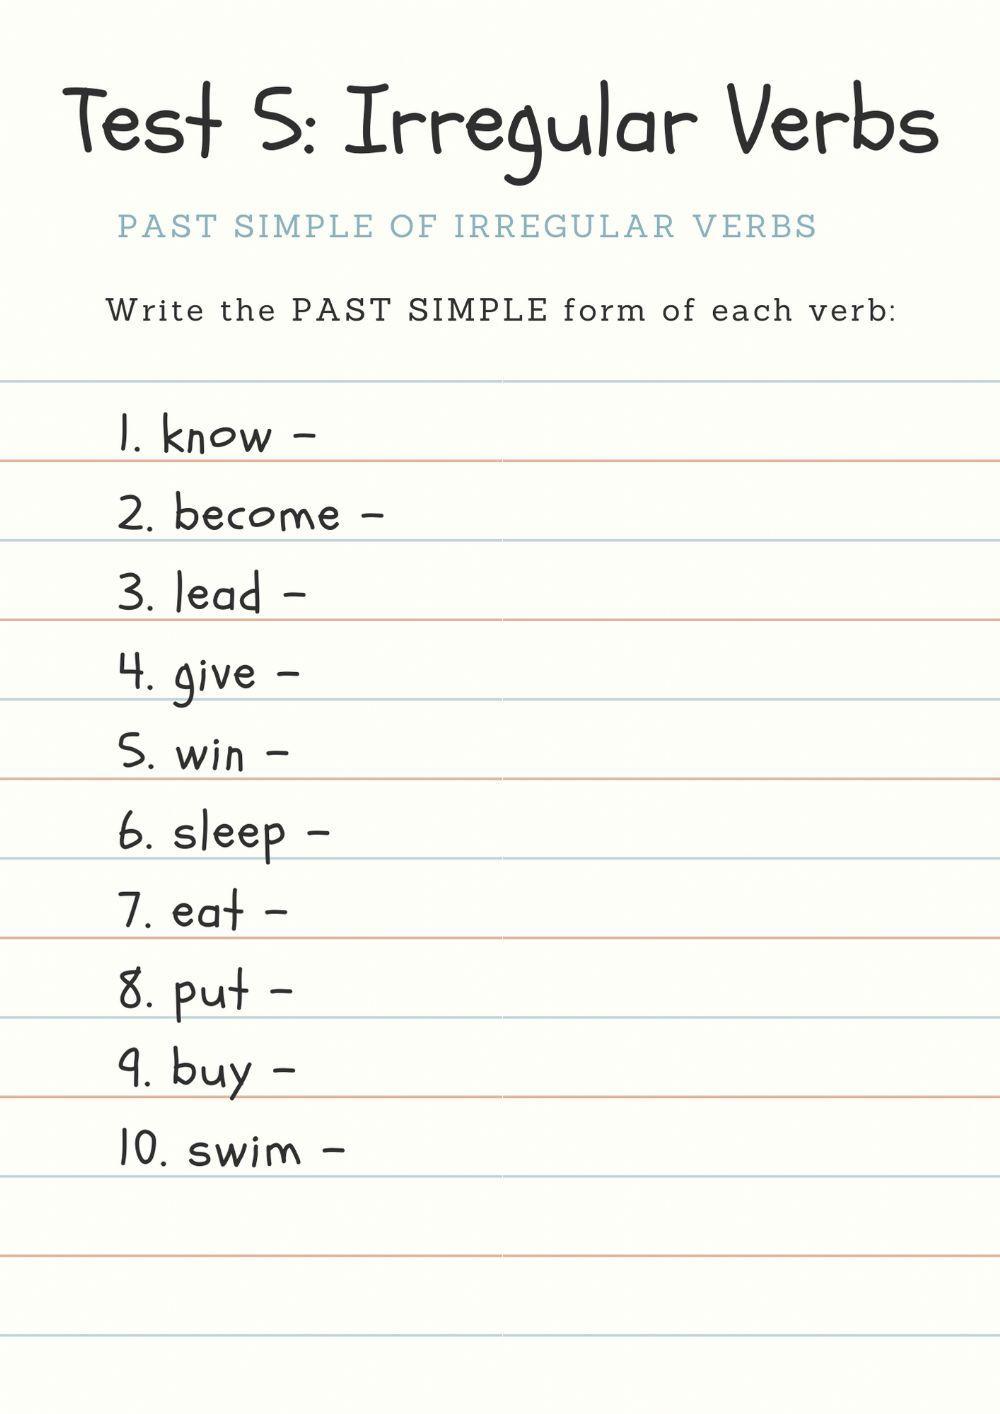 Irregular Verb Past Simple Test (5)